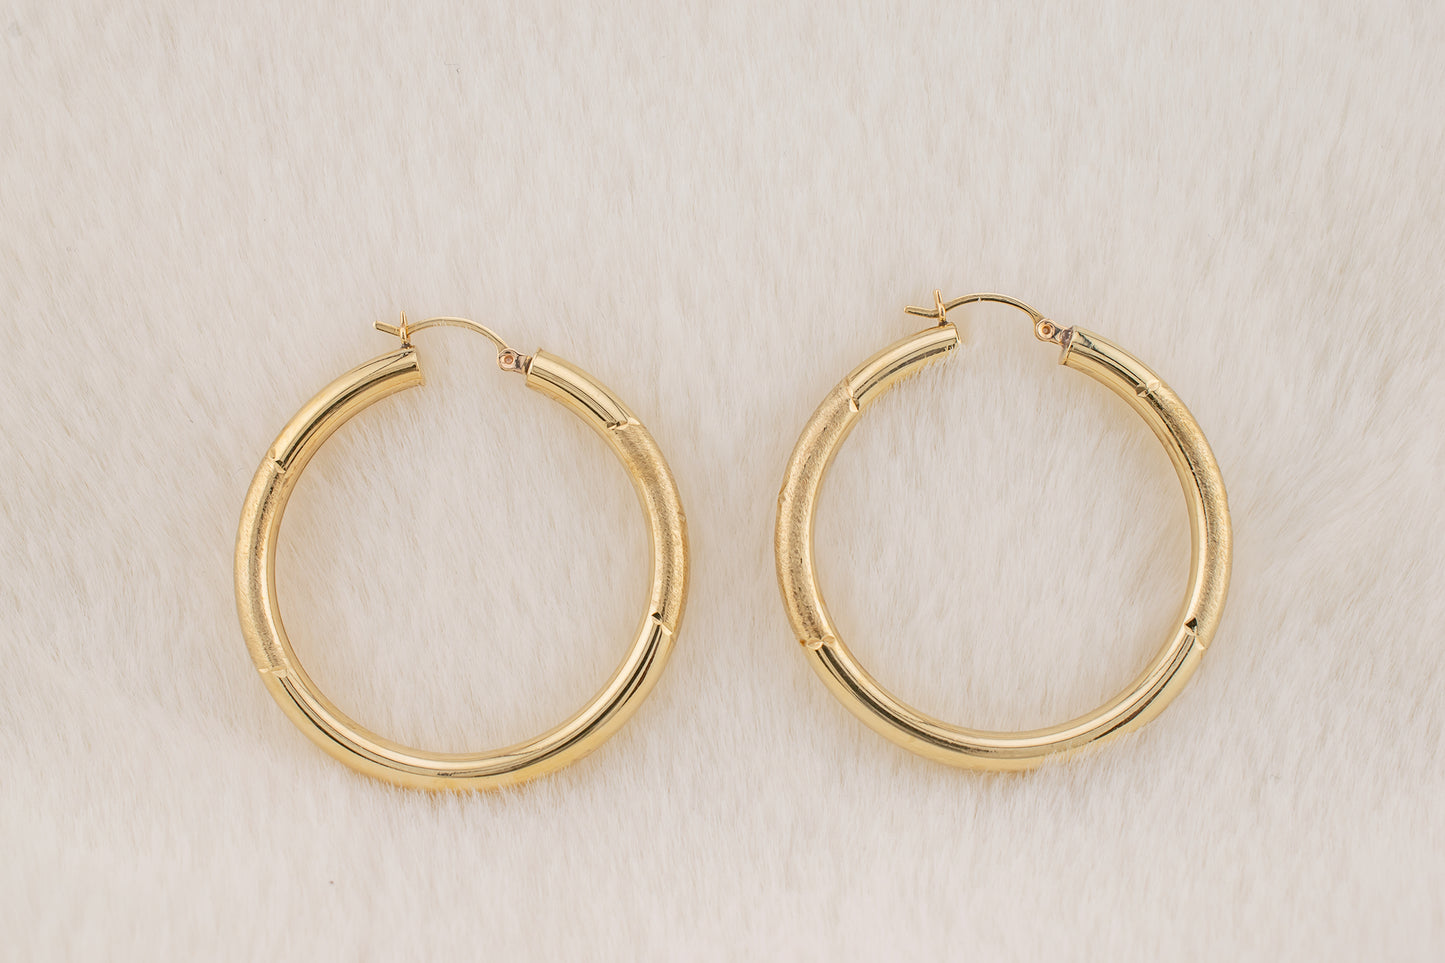 90s Vintage 14 Karat Yellow Gold Diamond Cut, Brushed Finish, High Polish Hoop Earrings 41mm